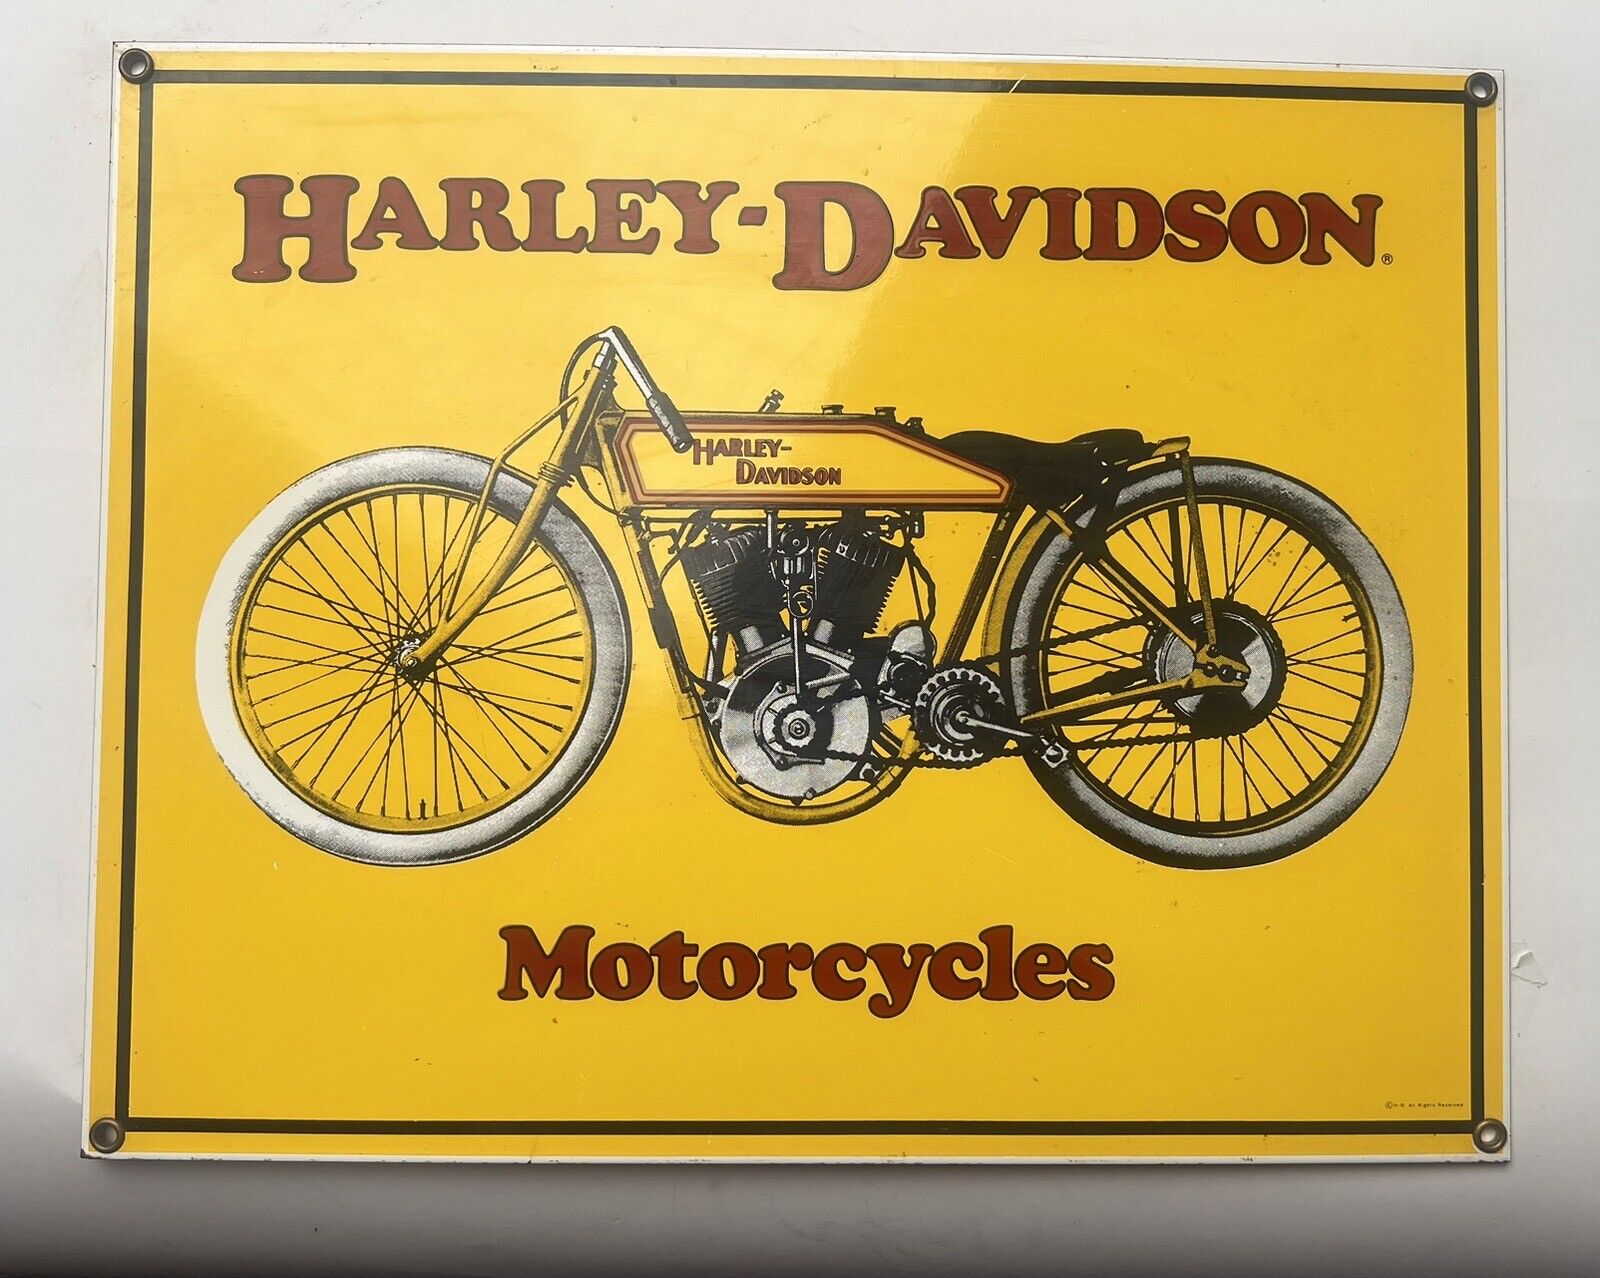 Harley Davidson motorcycle porcelain enamel sign vintage motorcycle yellow